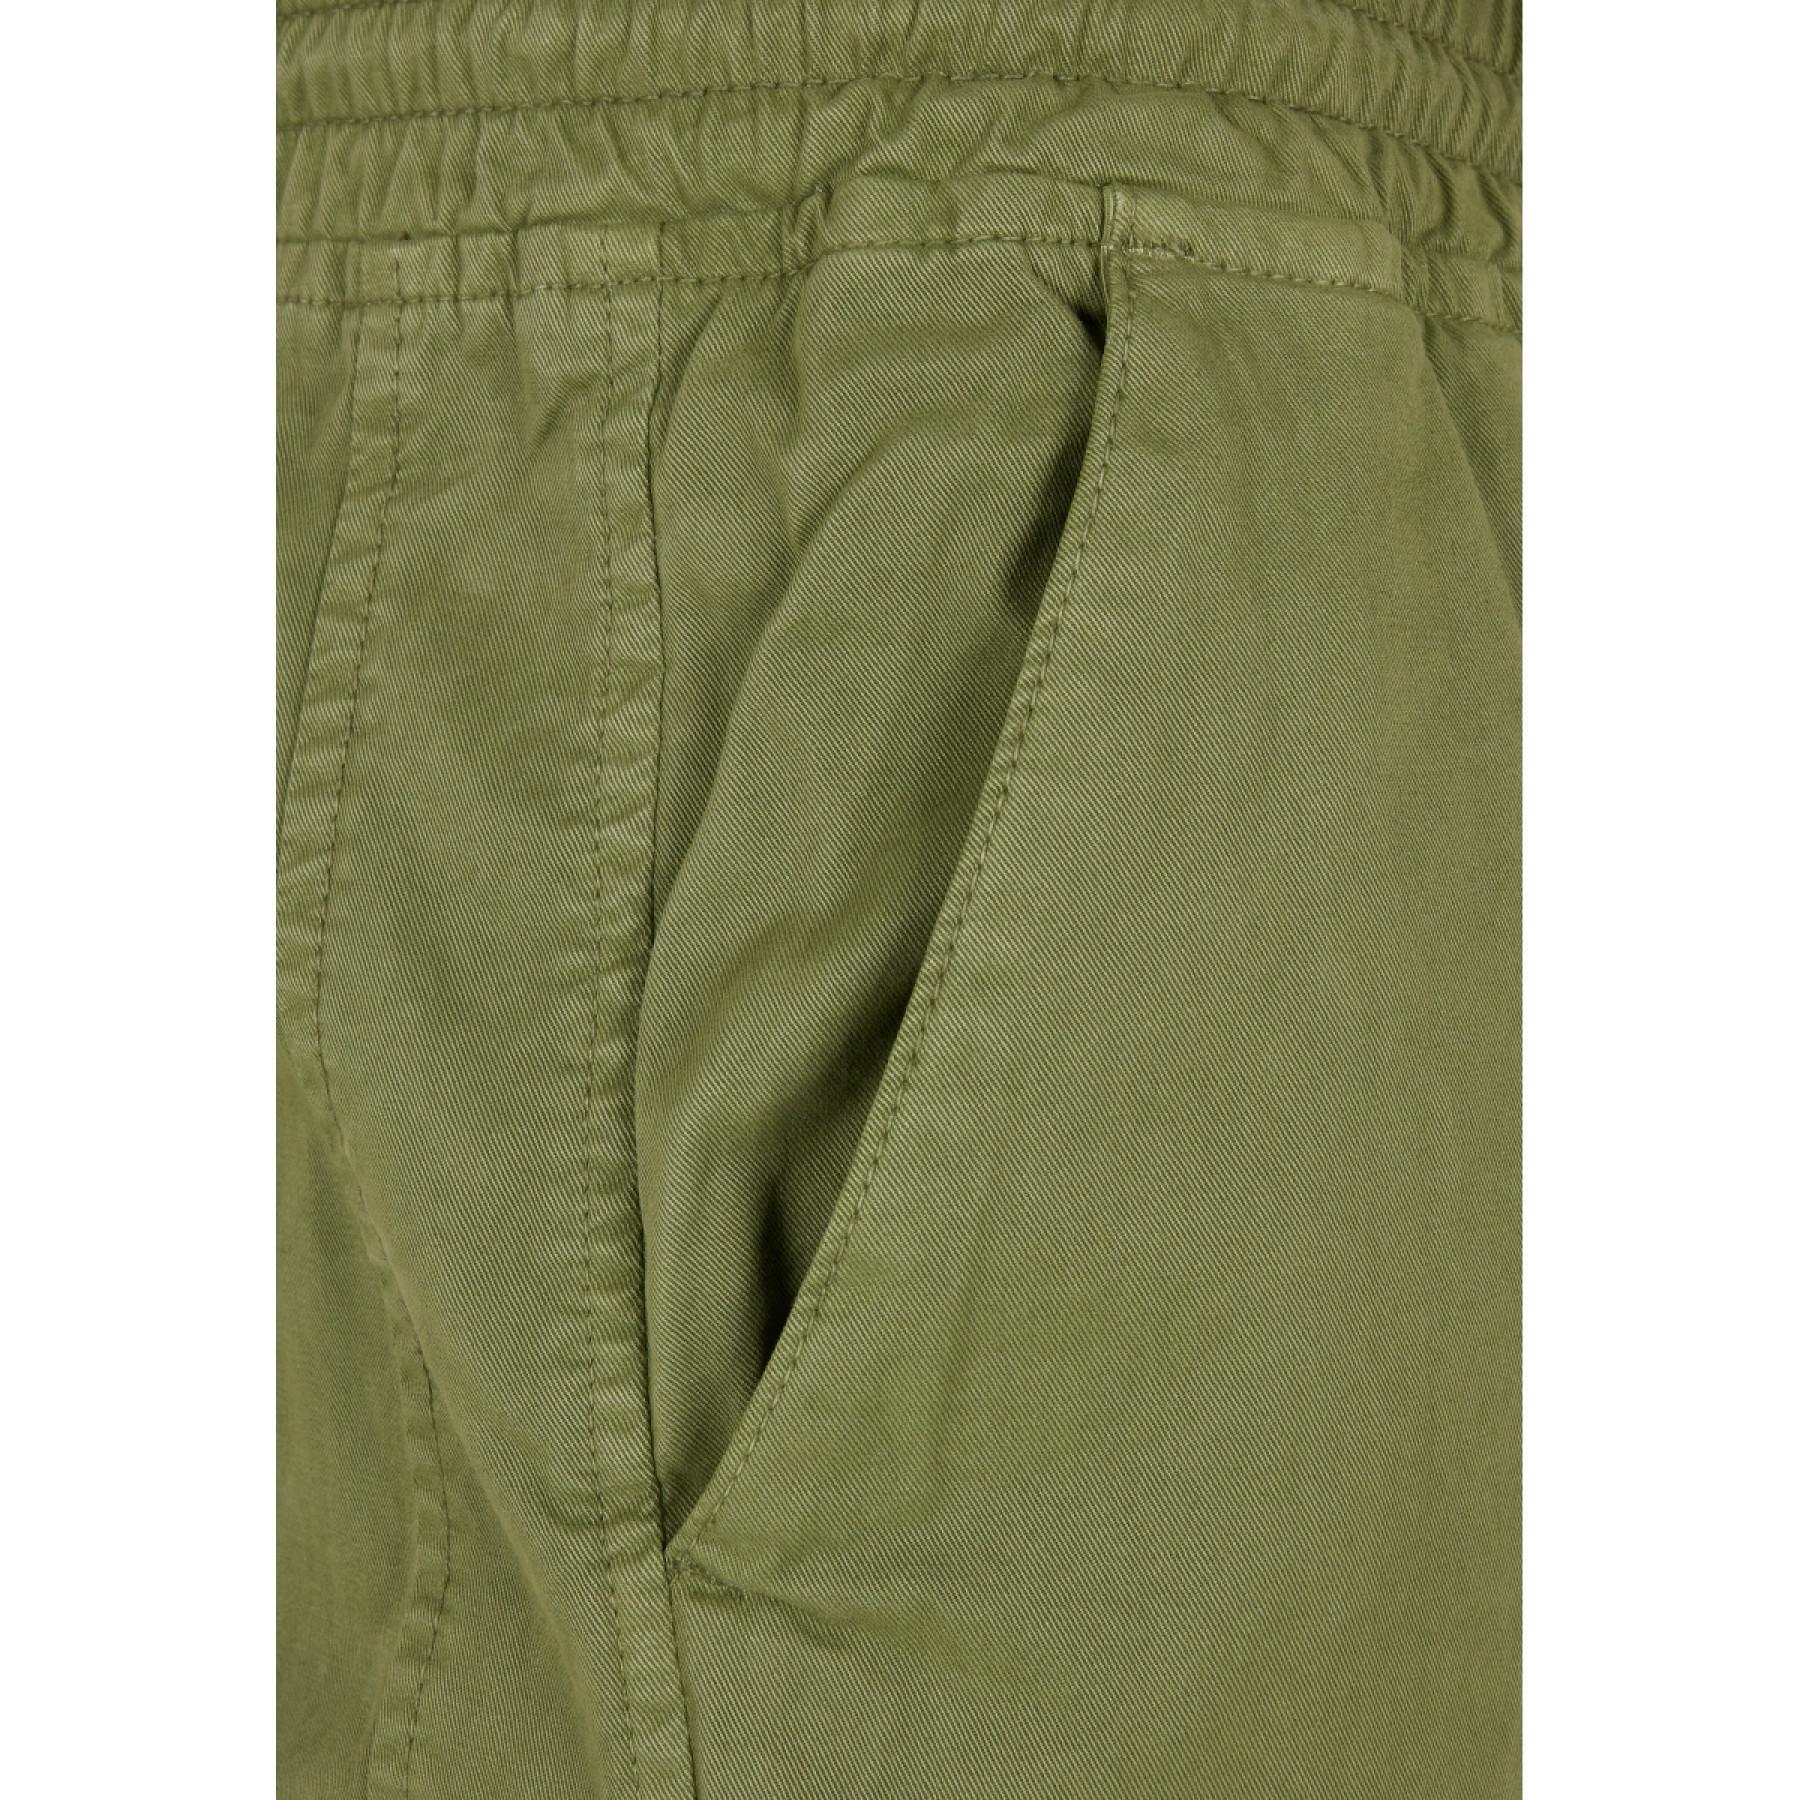 Pantaloni Urban Classics military-grandes tailles